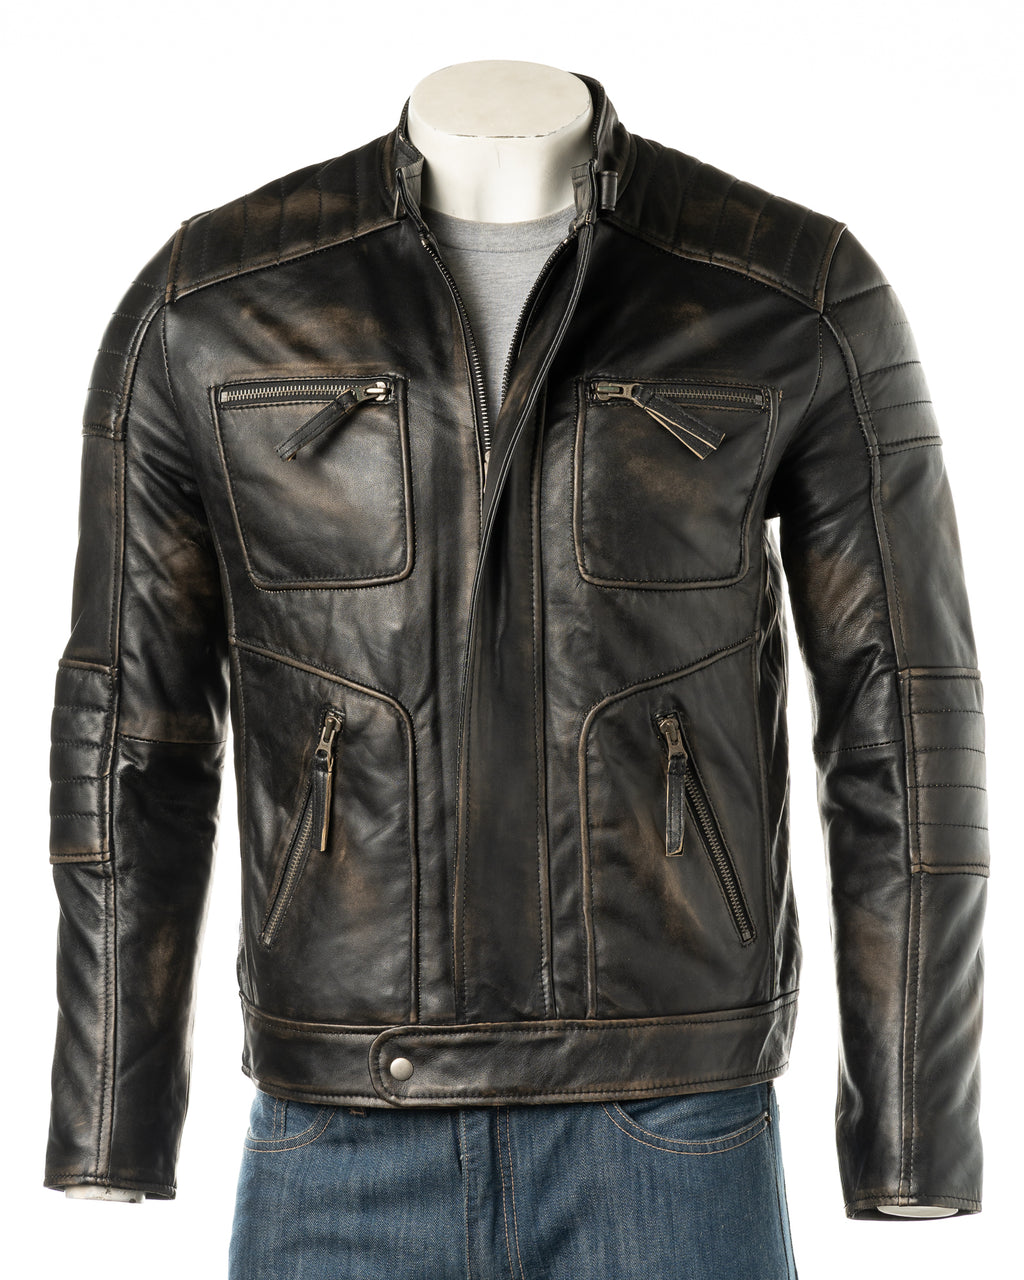 Mens Antique Black Leather Biker Style Jacket: Edoardo